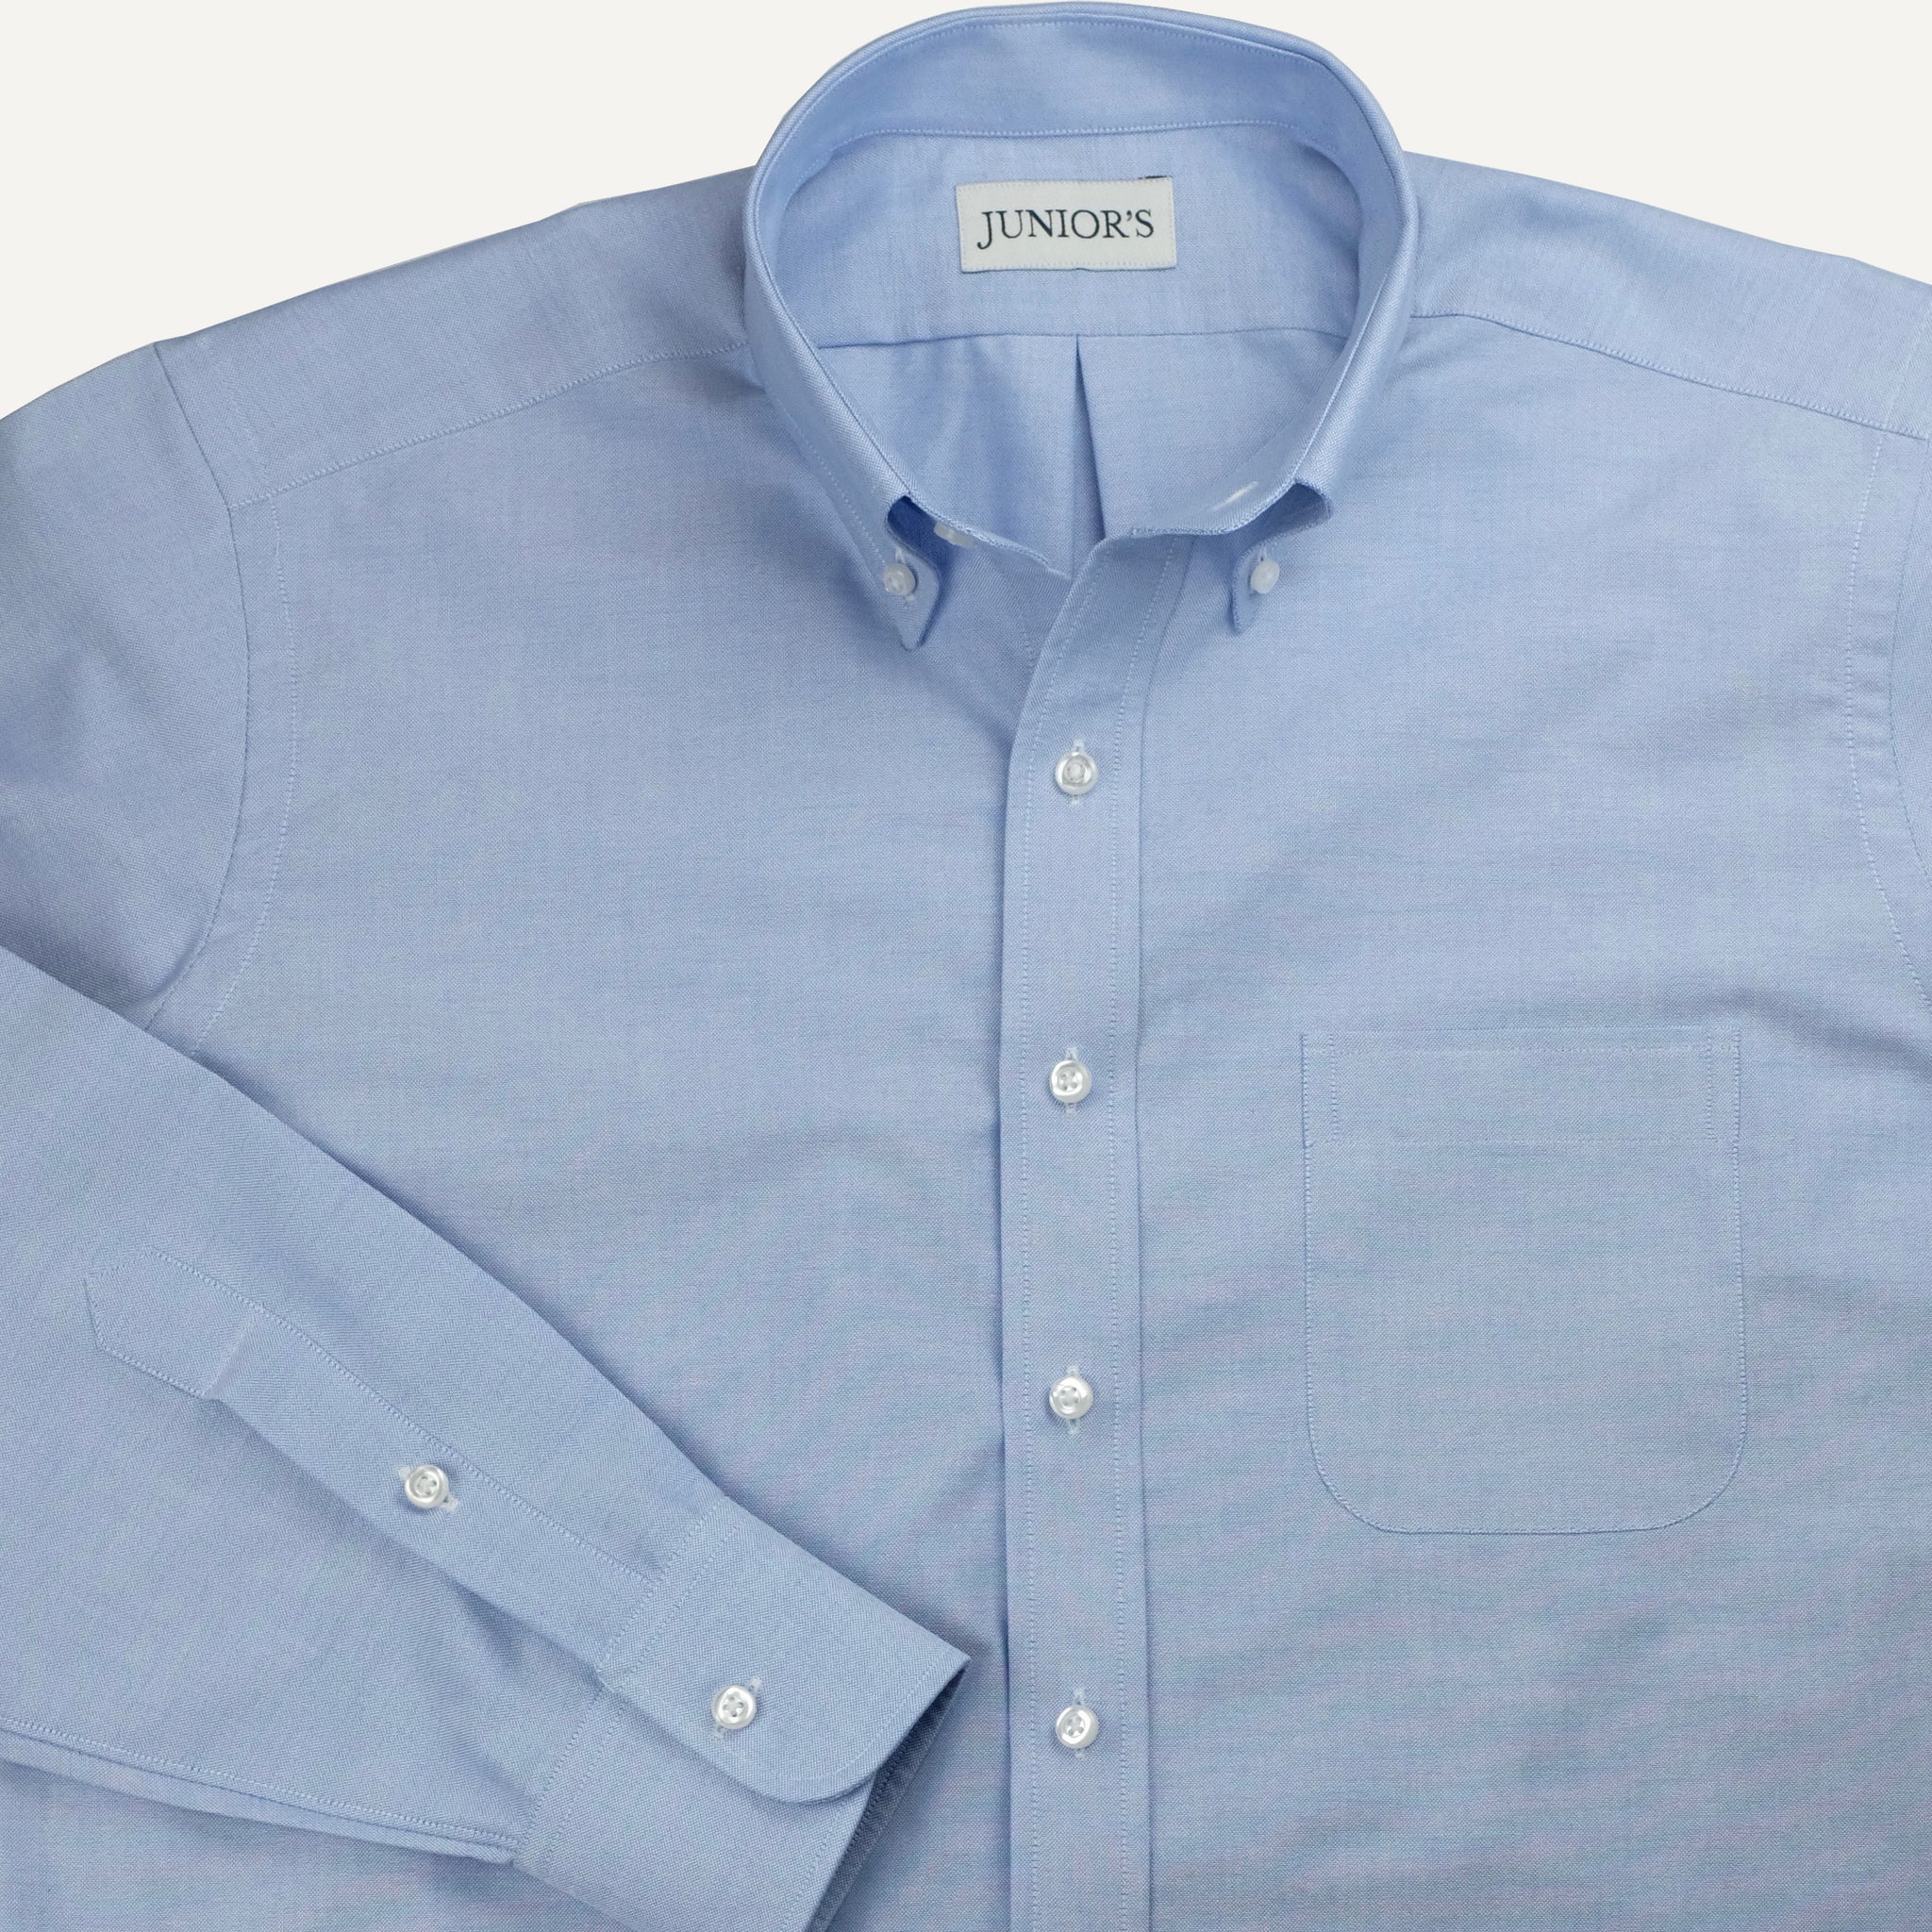 Blue Oxford Cloth - Made-to-Order Shirt - Junior's